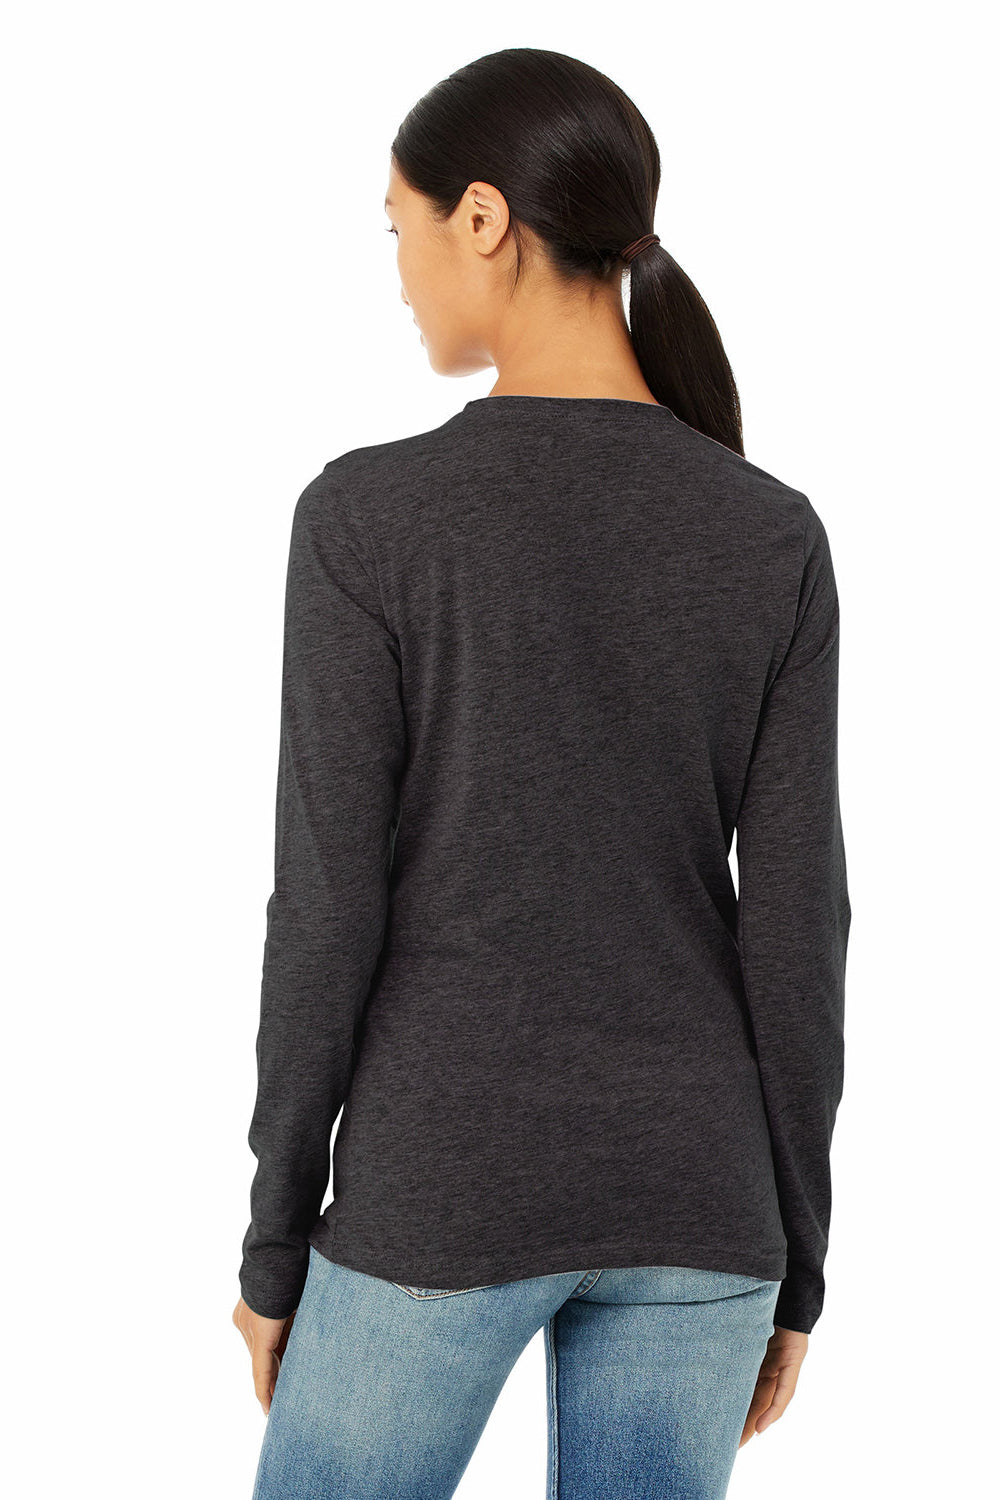 Bella + Canvas B6500/6500 Womens Jersey Long Sleeve Crewneck T-Shirt Heather Dark Grey Model Back